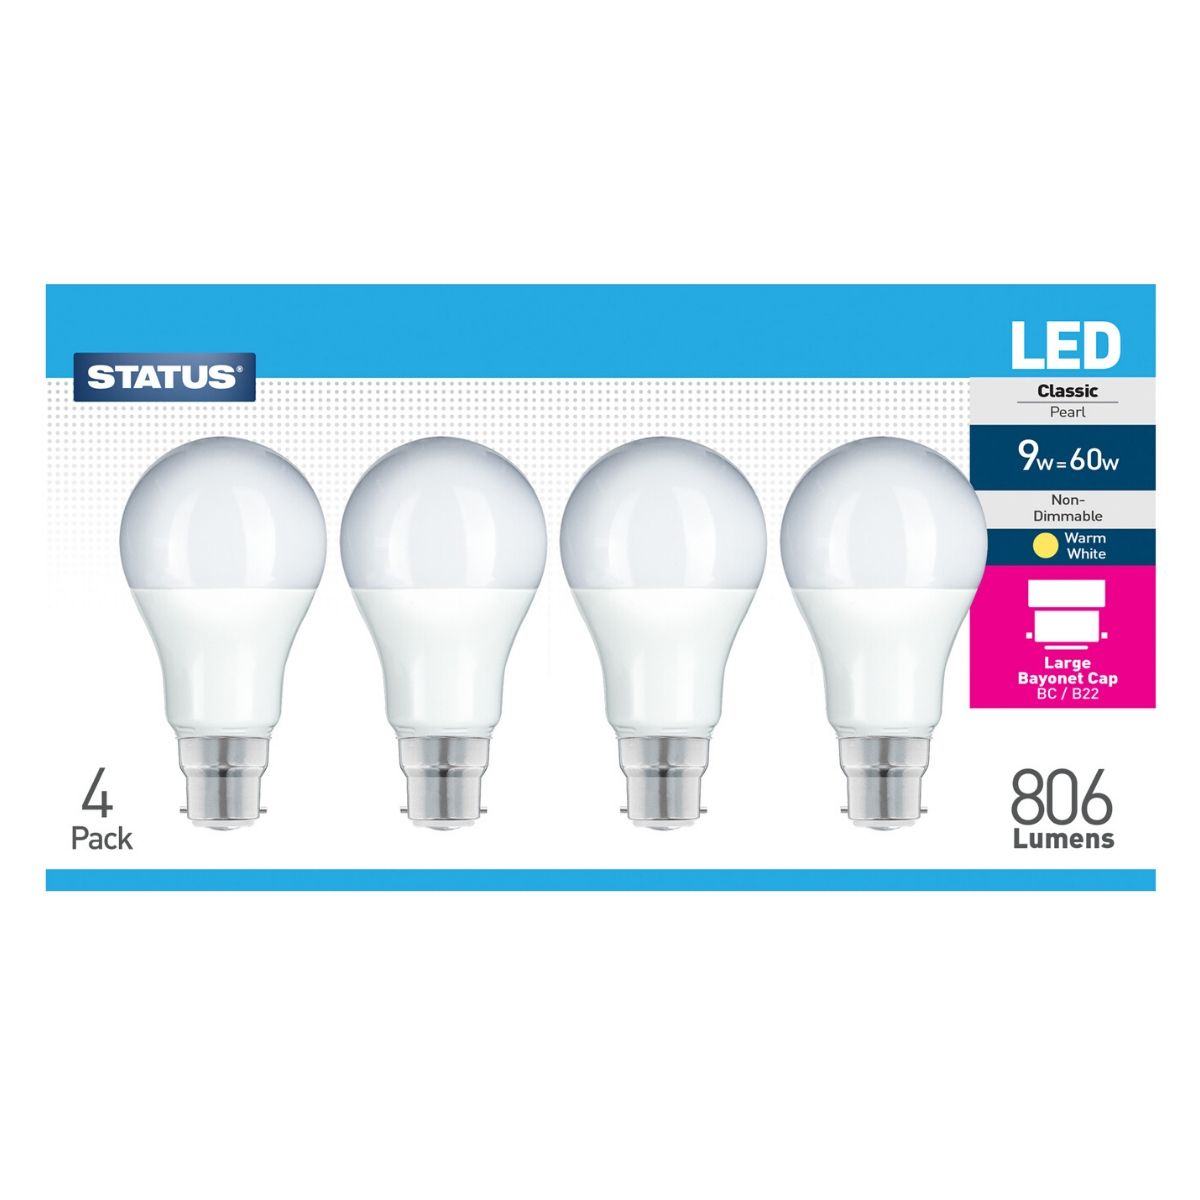 View 4 x 9w B22 LED Light Bulbs information